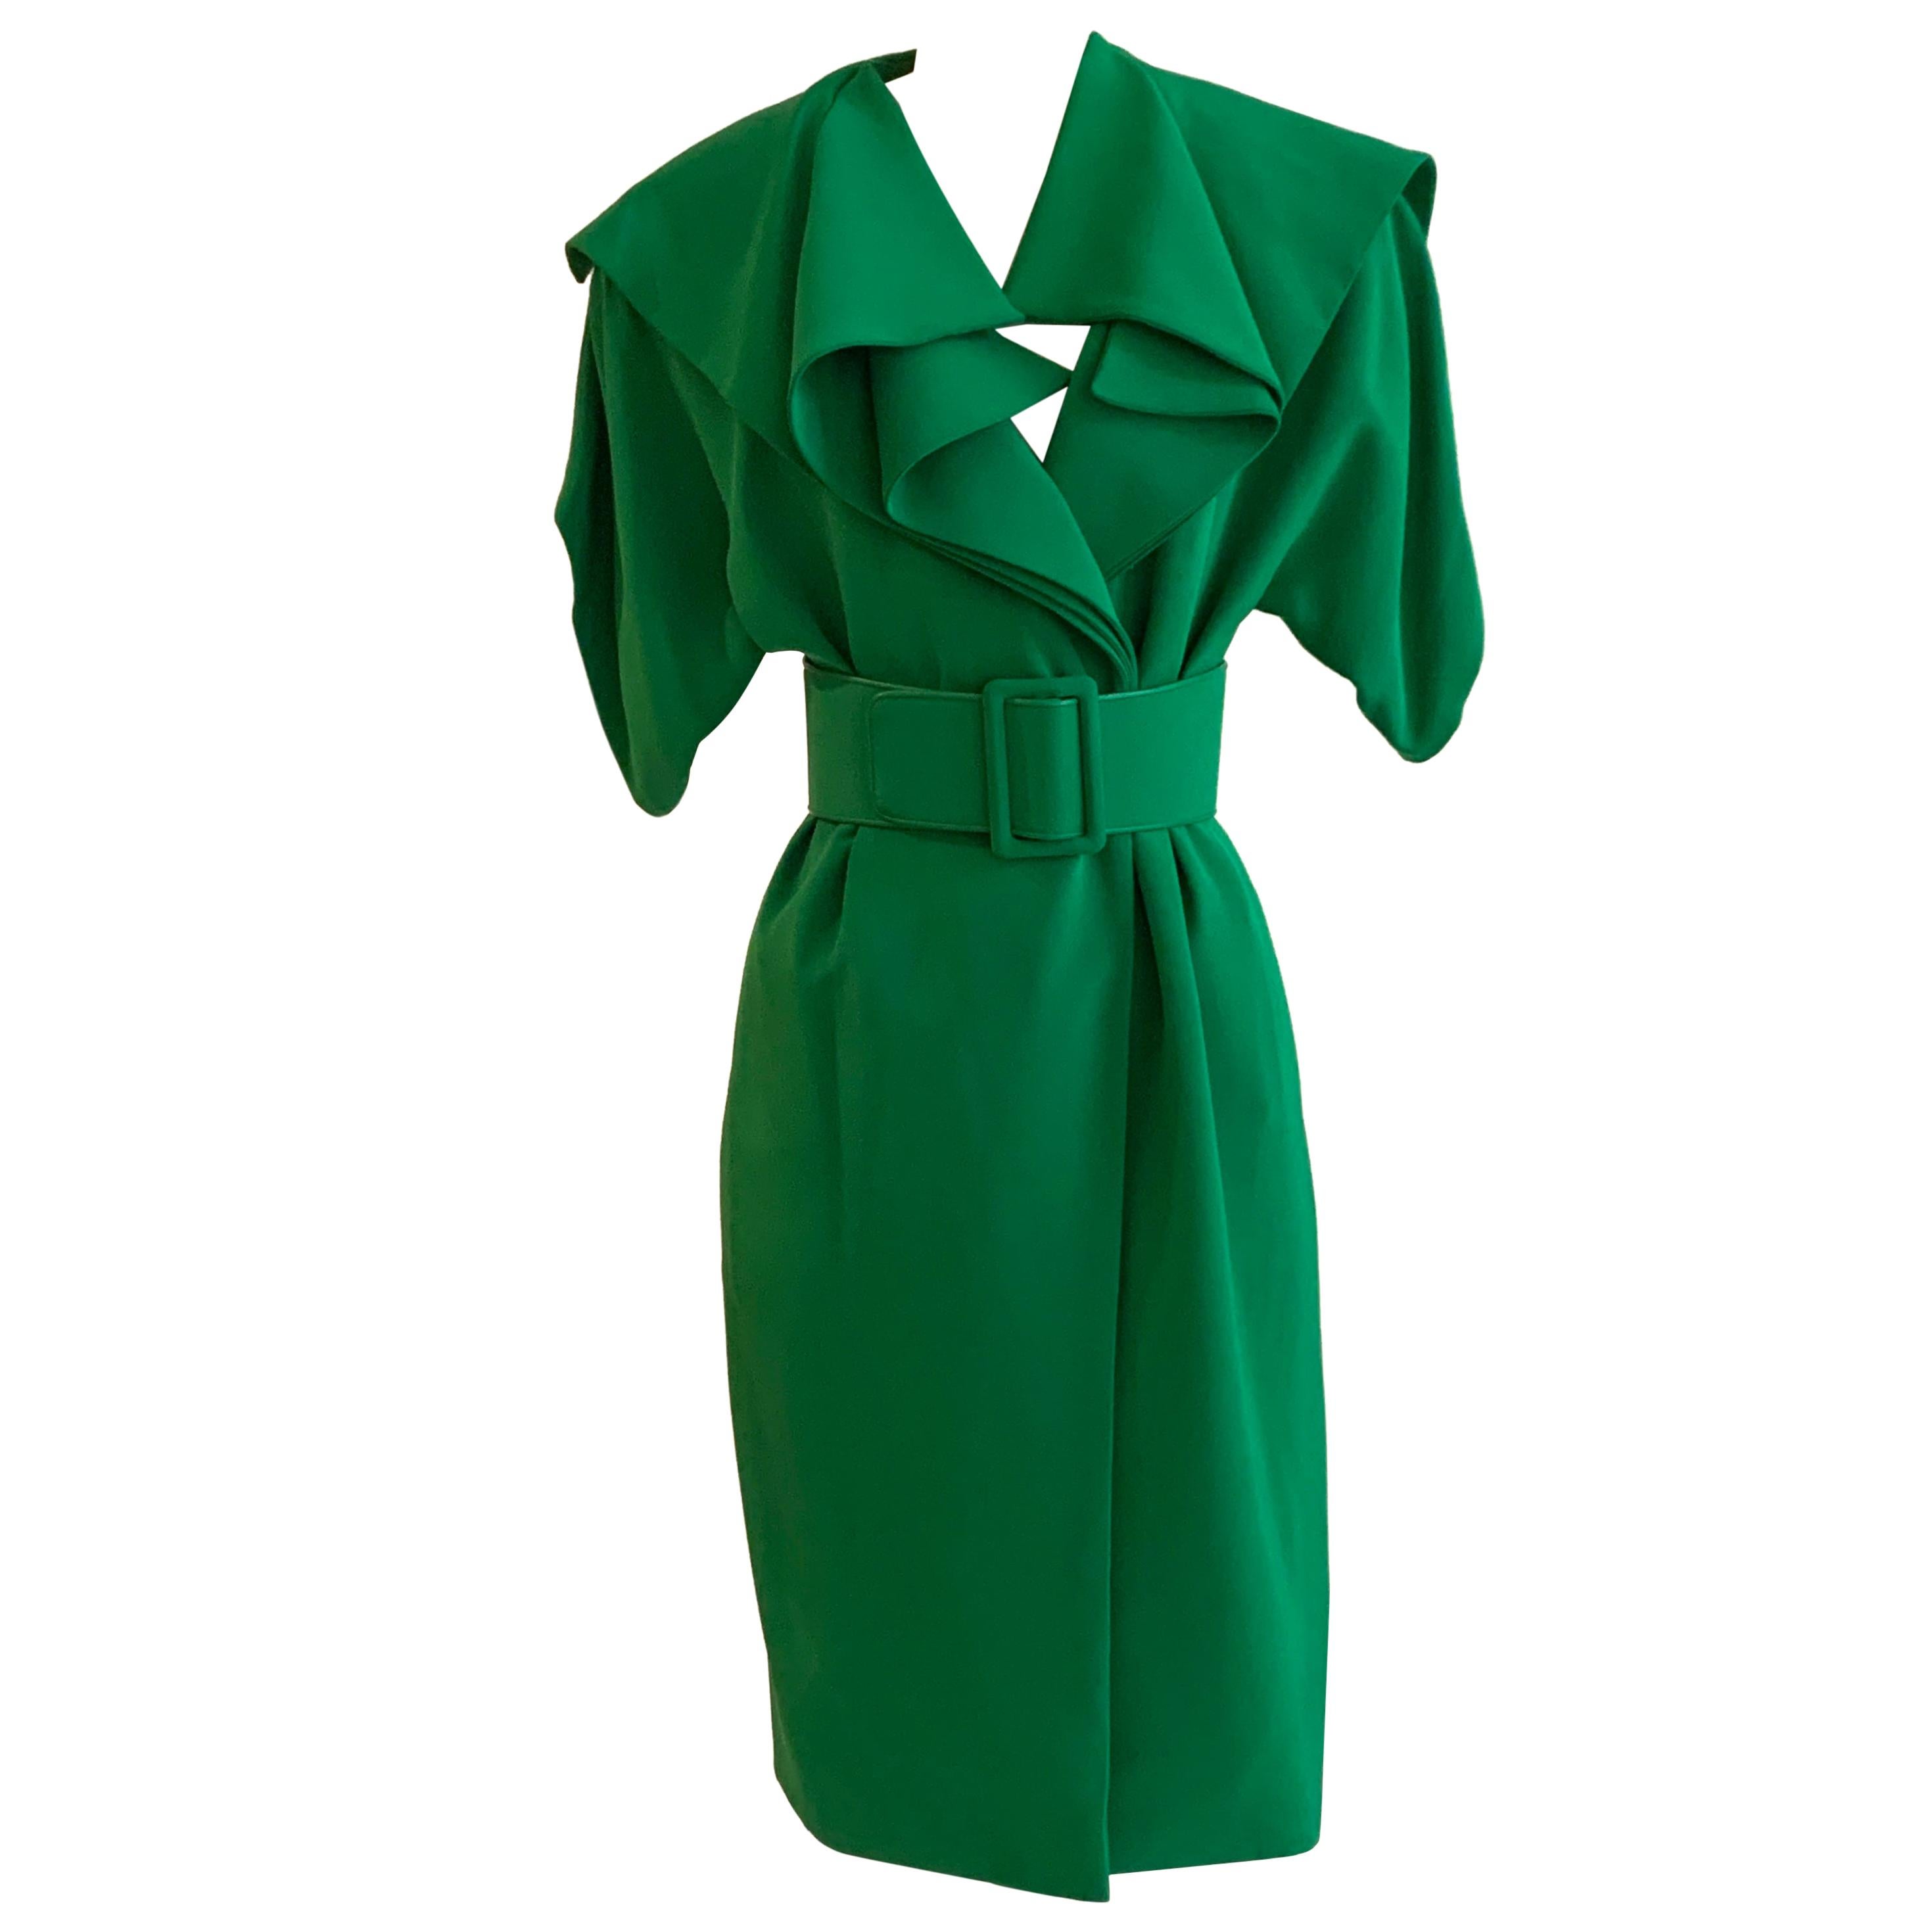 Unworn Galanos 1980s Kelly Green Coat Dress with Draped Shawl Collar at ...